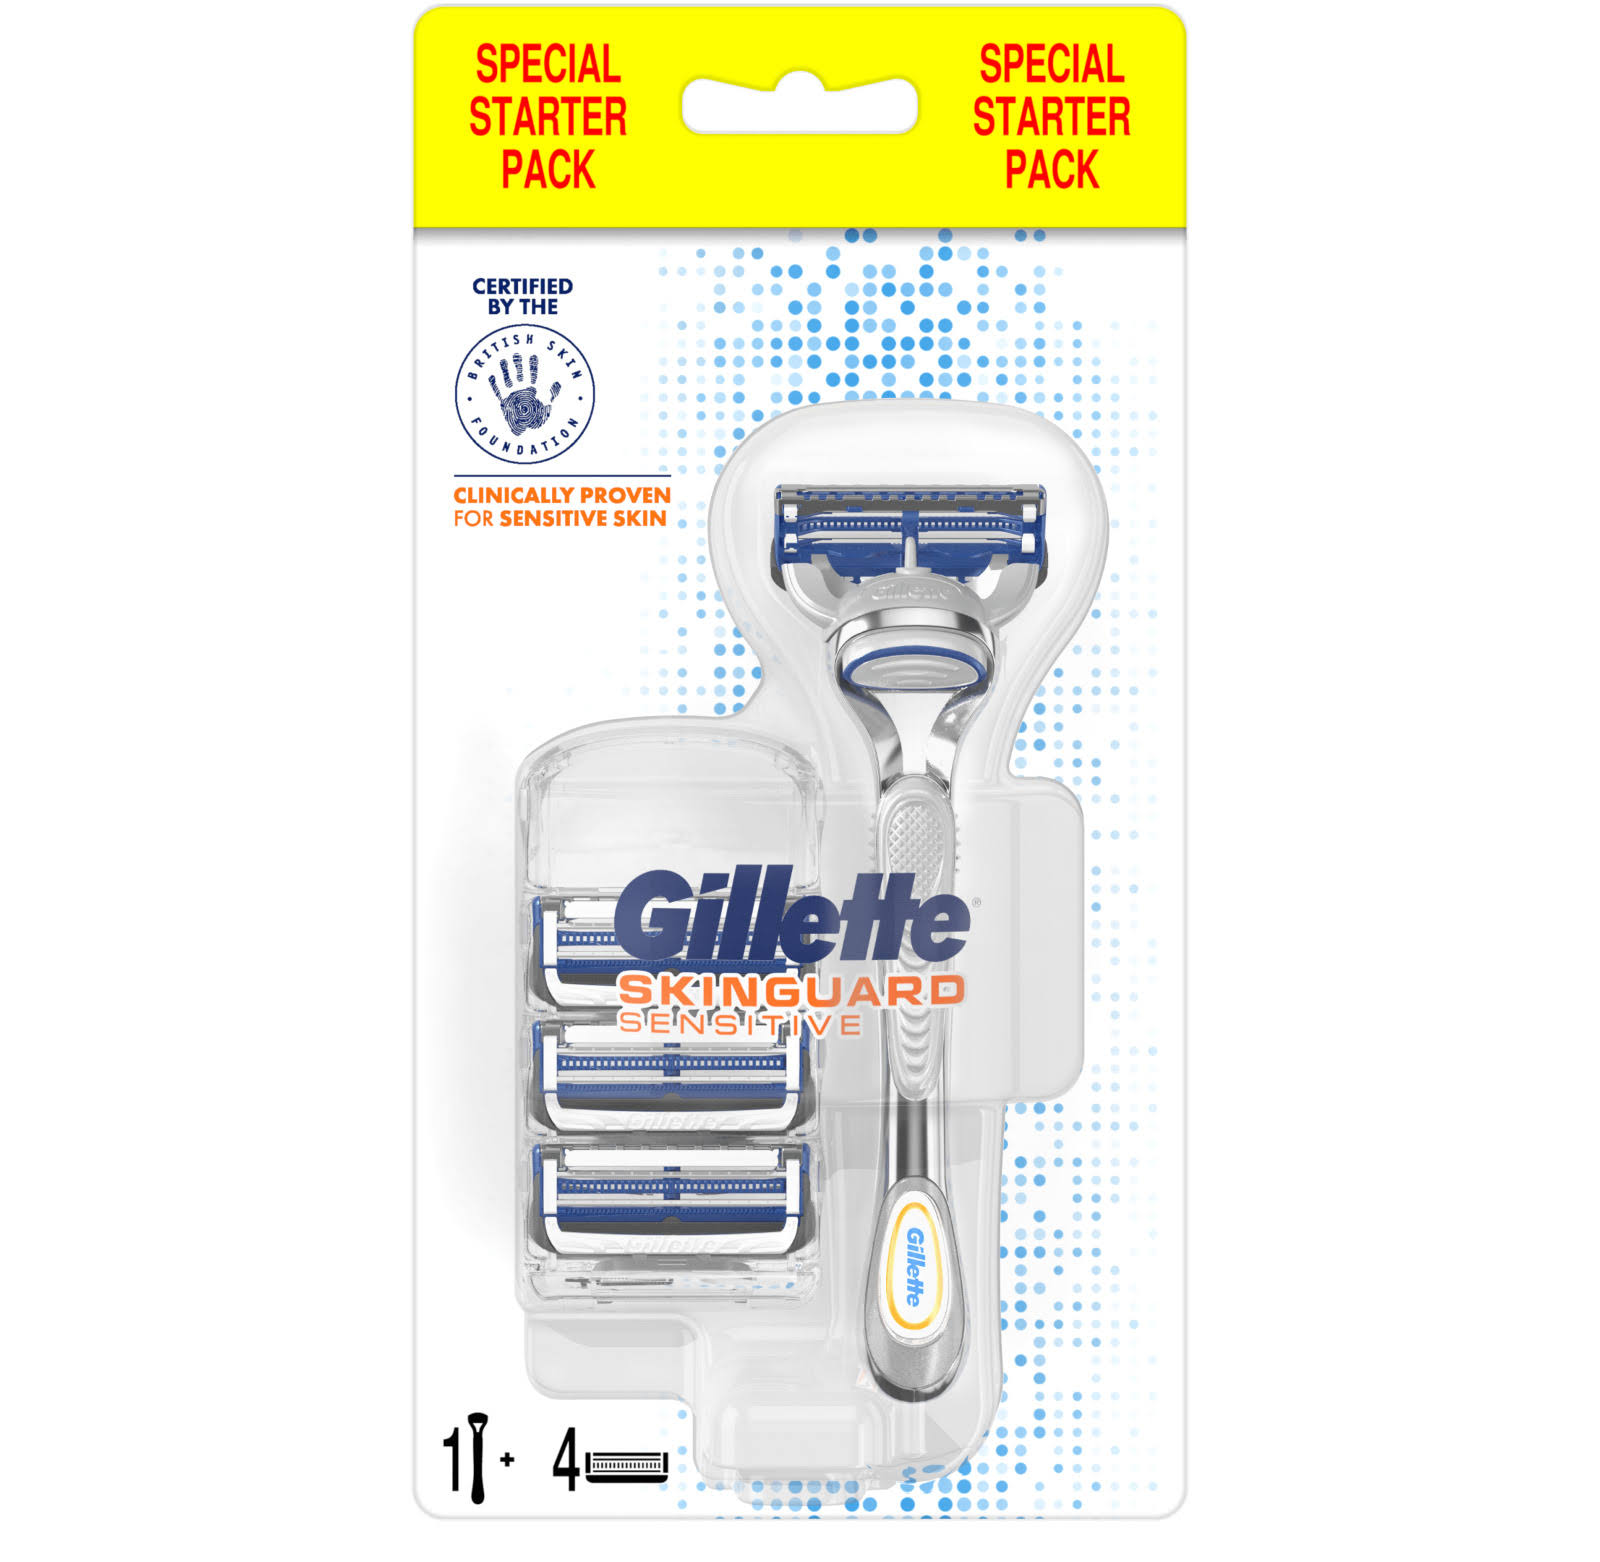 Gillette Skinguard Sensitive Razor Starter Pack